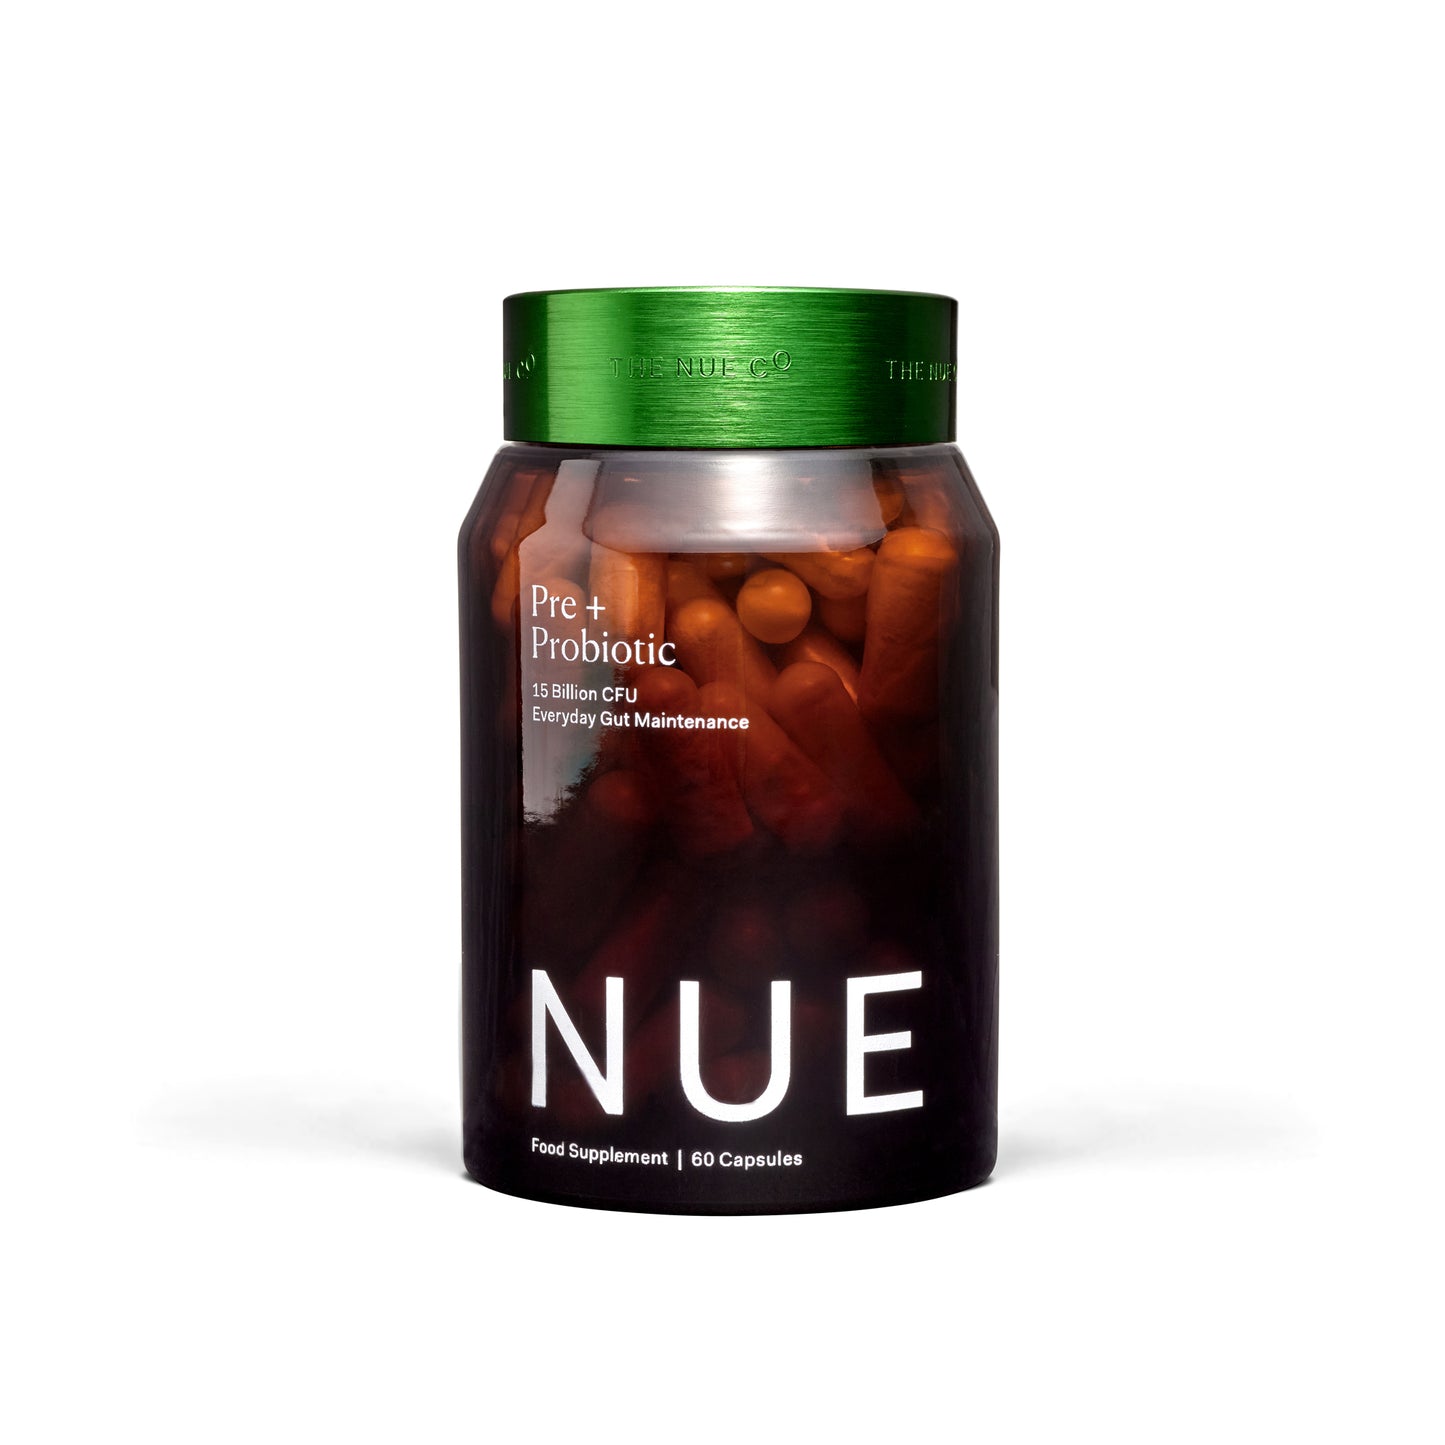 The Nue Co. Prebiotic + Probiotic Supplement